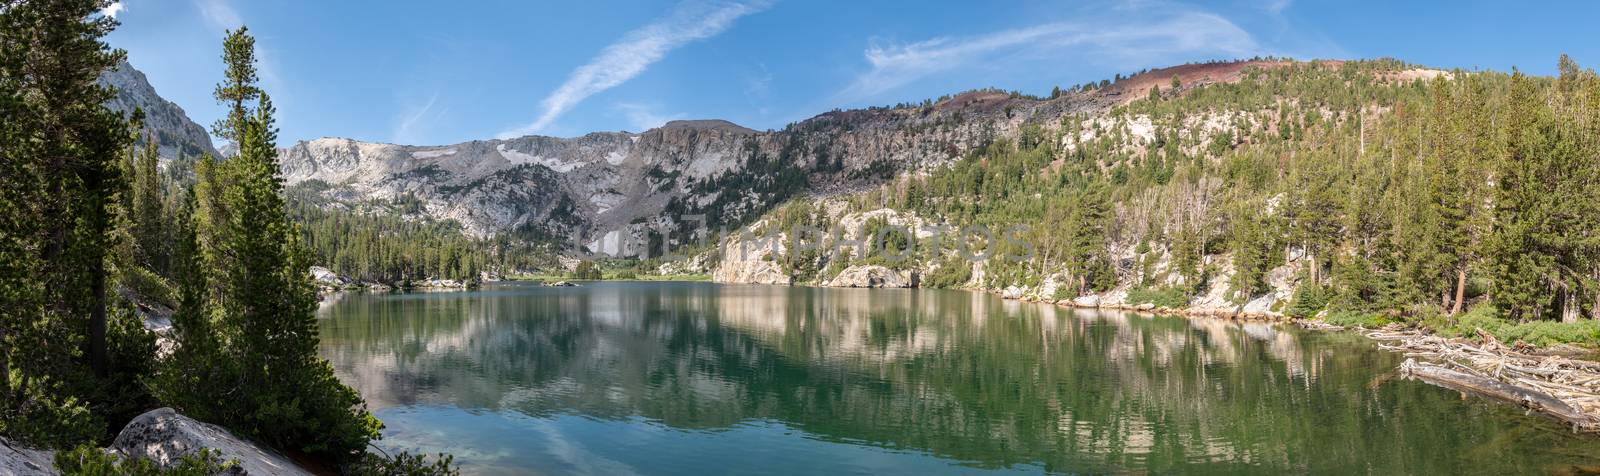 Panorama of Crystal Lake in Mammoth Lakes, California